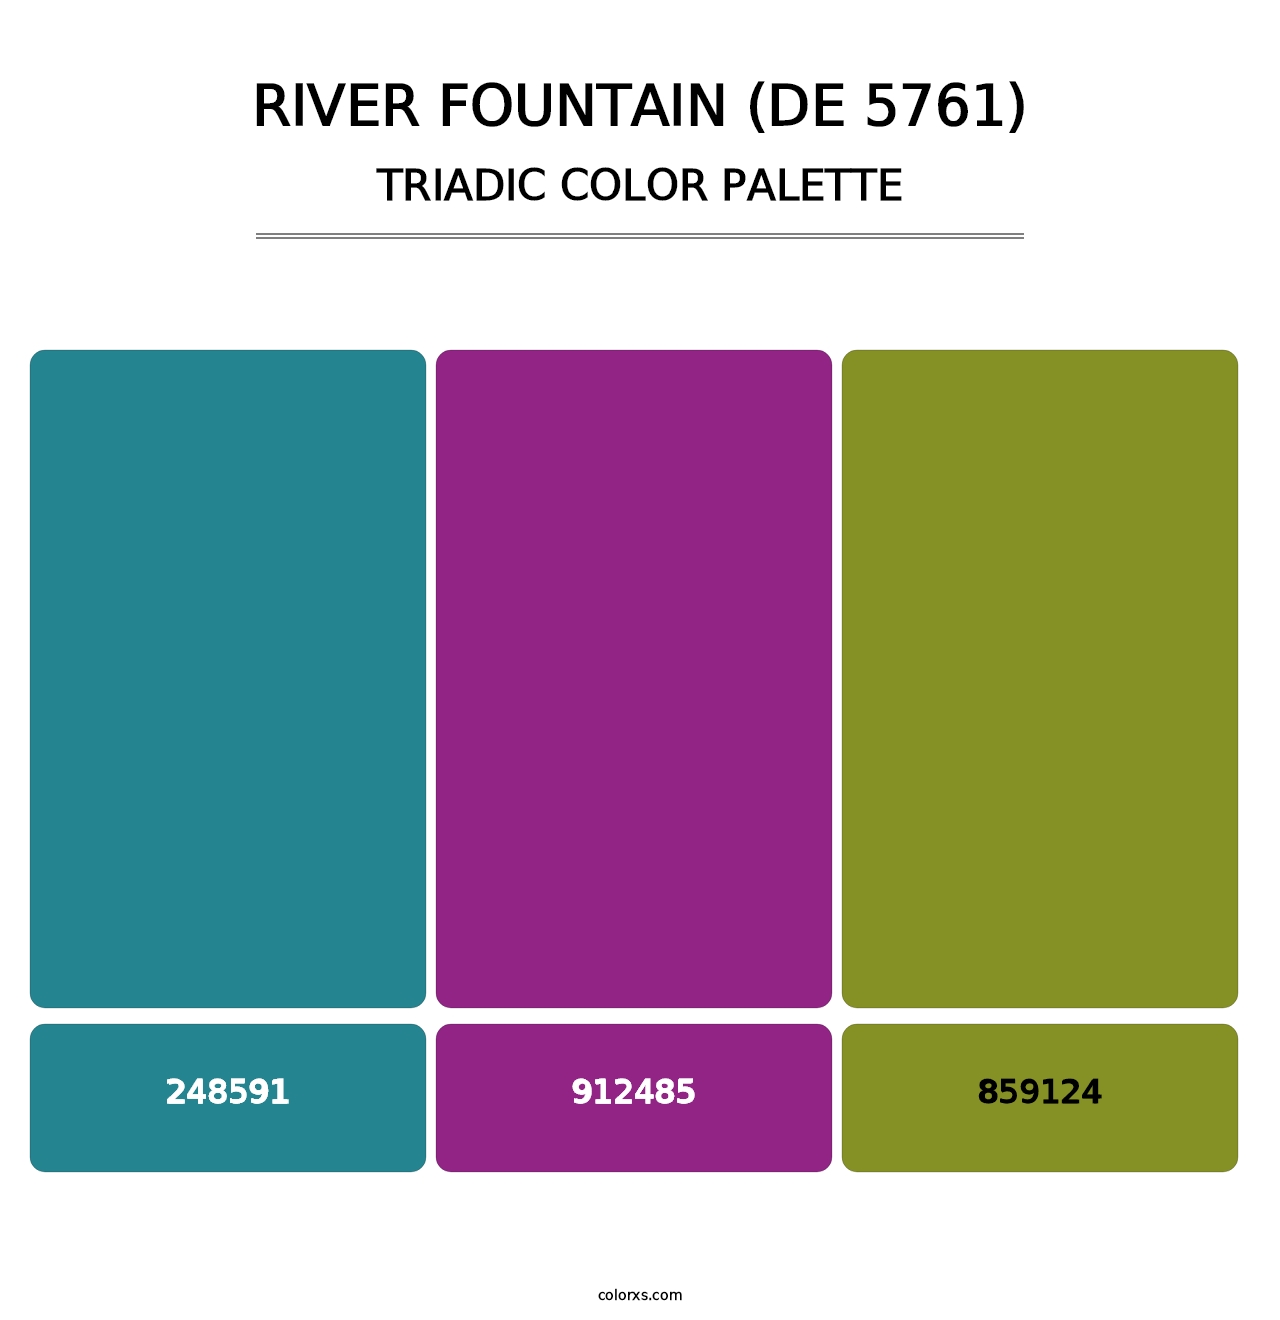 River Fountain (DE 5761) - Triadic Color Palette